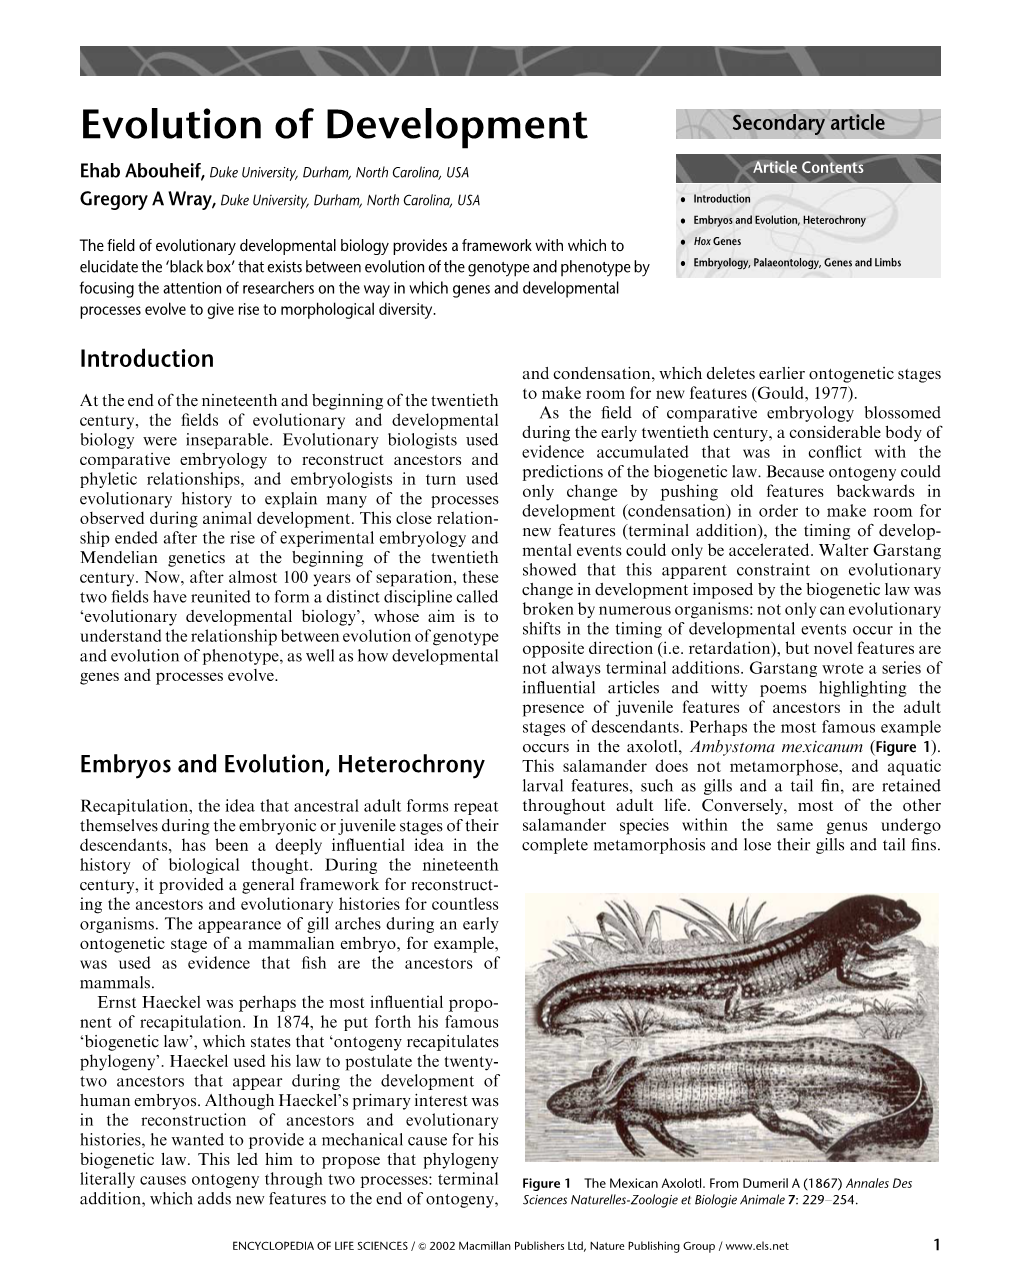 Evolution of Development Secondary Article